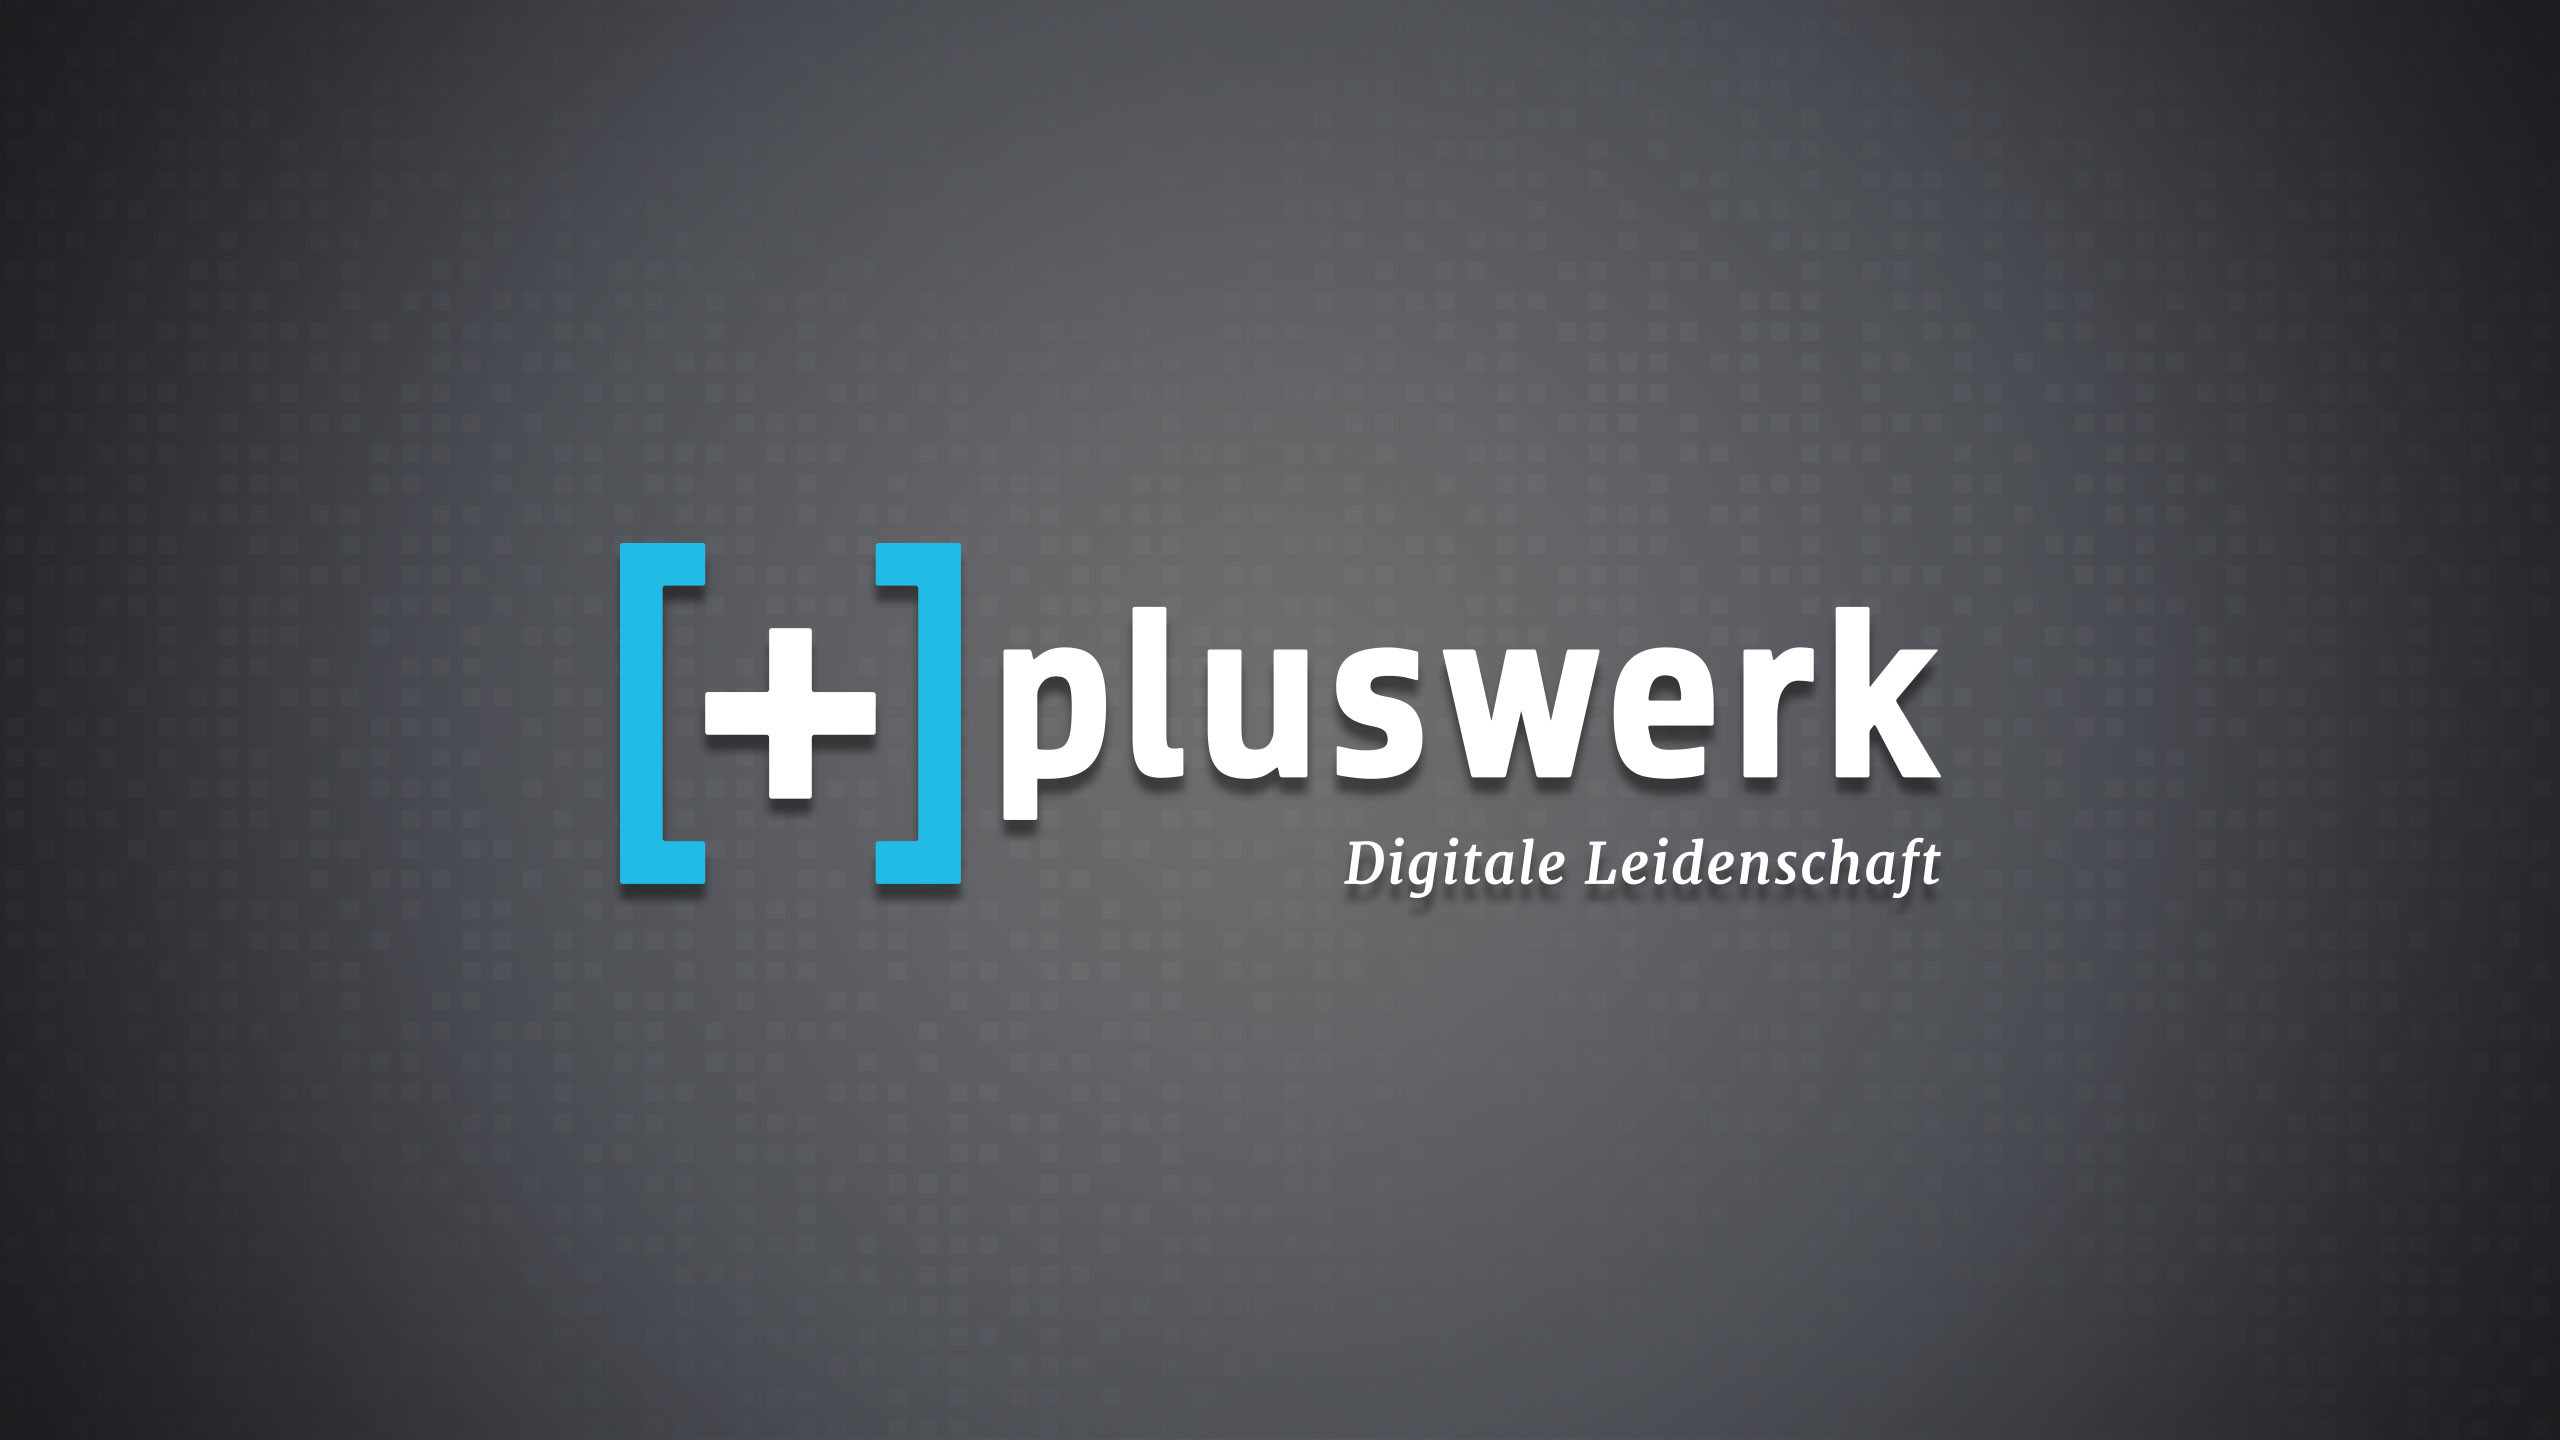 +Pluswerk - Digitale Leidenschaft